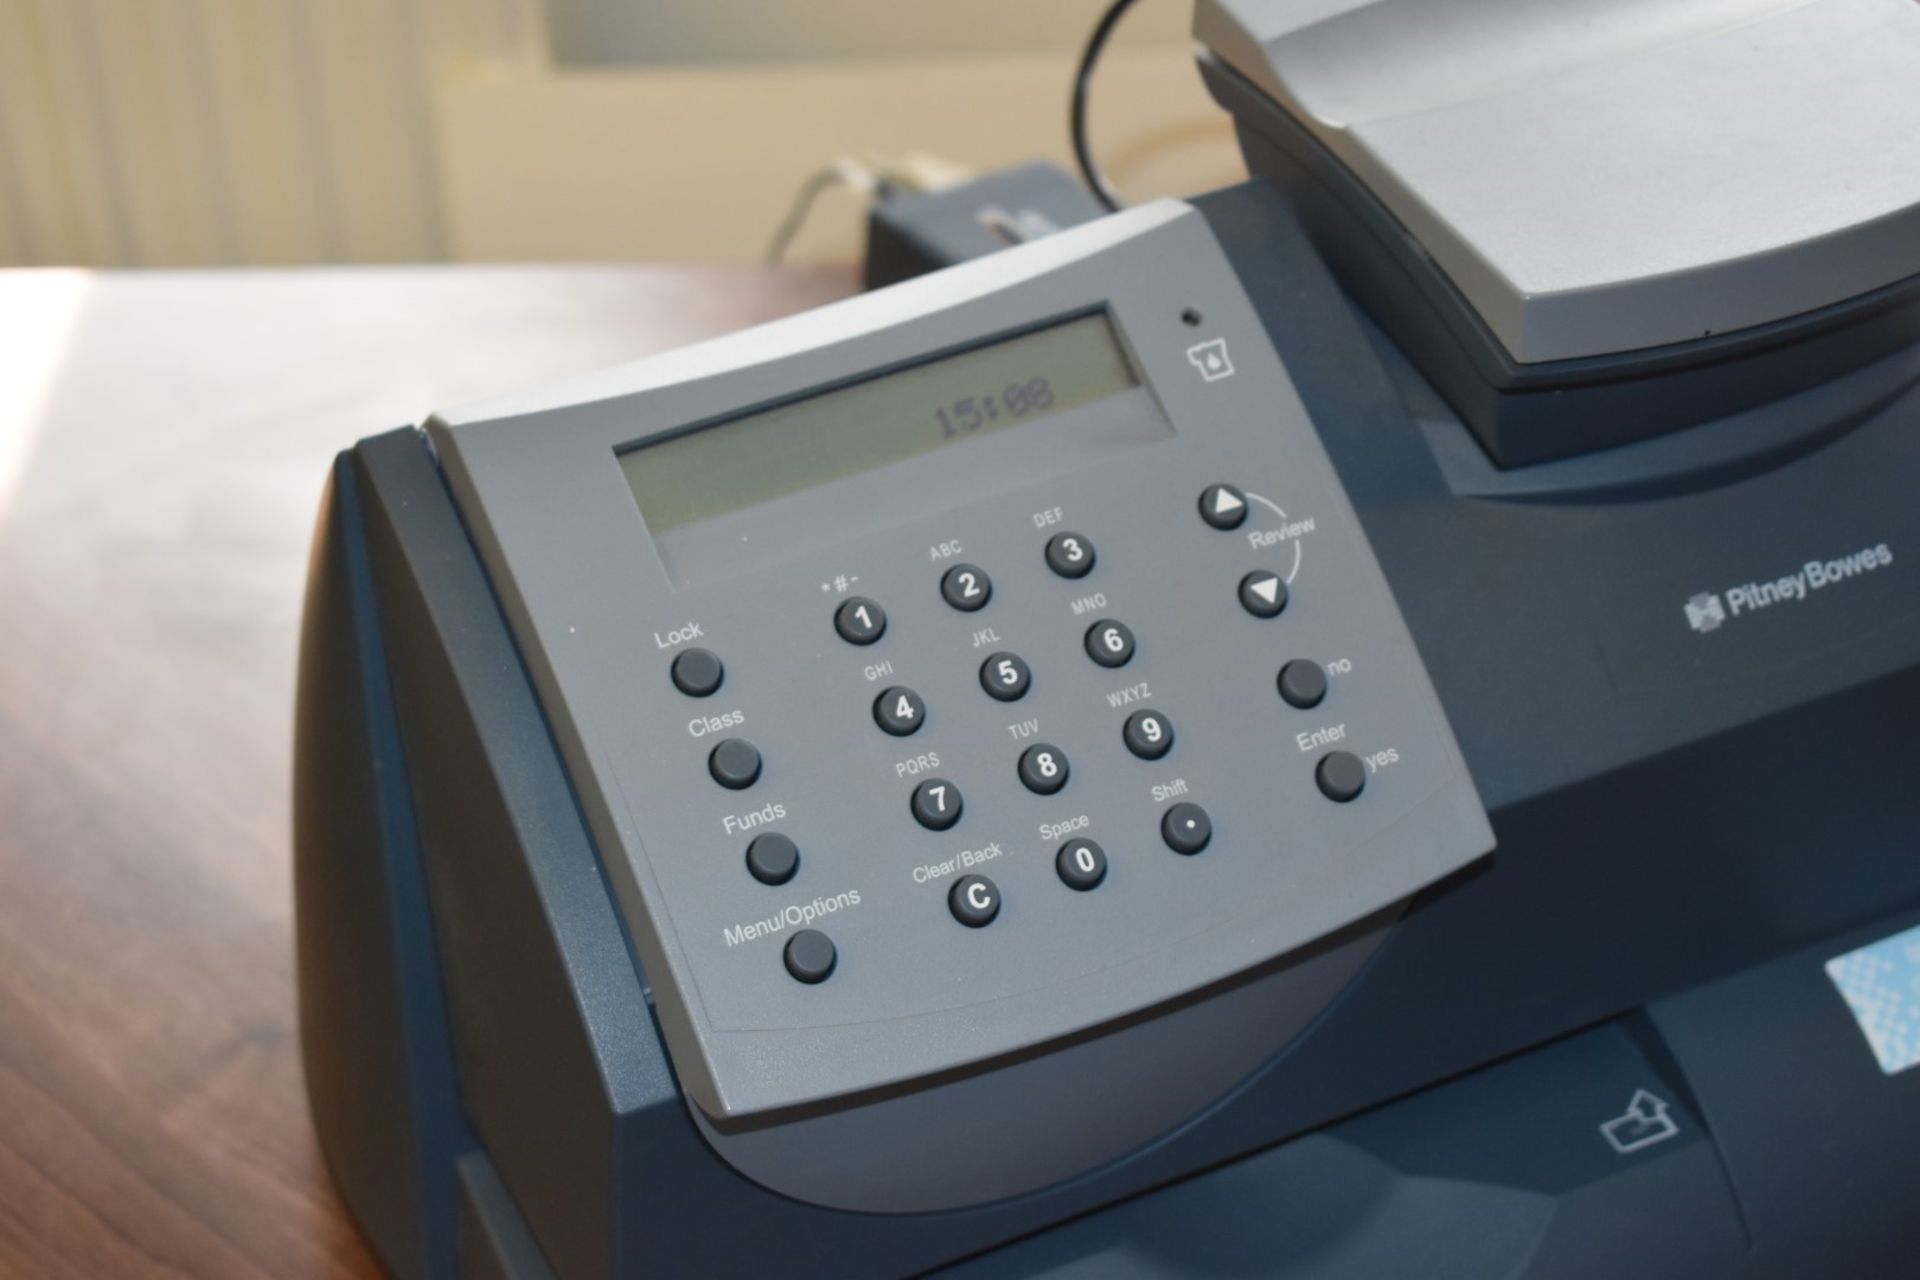 1 x Pitney Bowes K700 Mailstation Franking Machine With USB Communications Device - Image 4 of 4